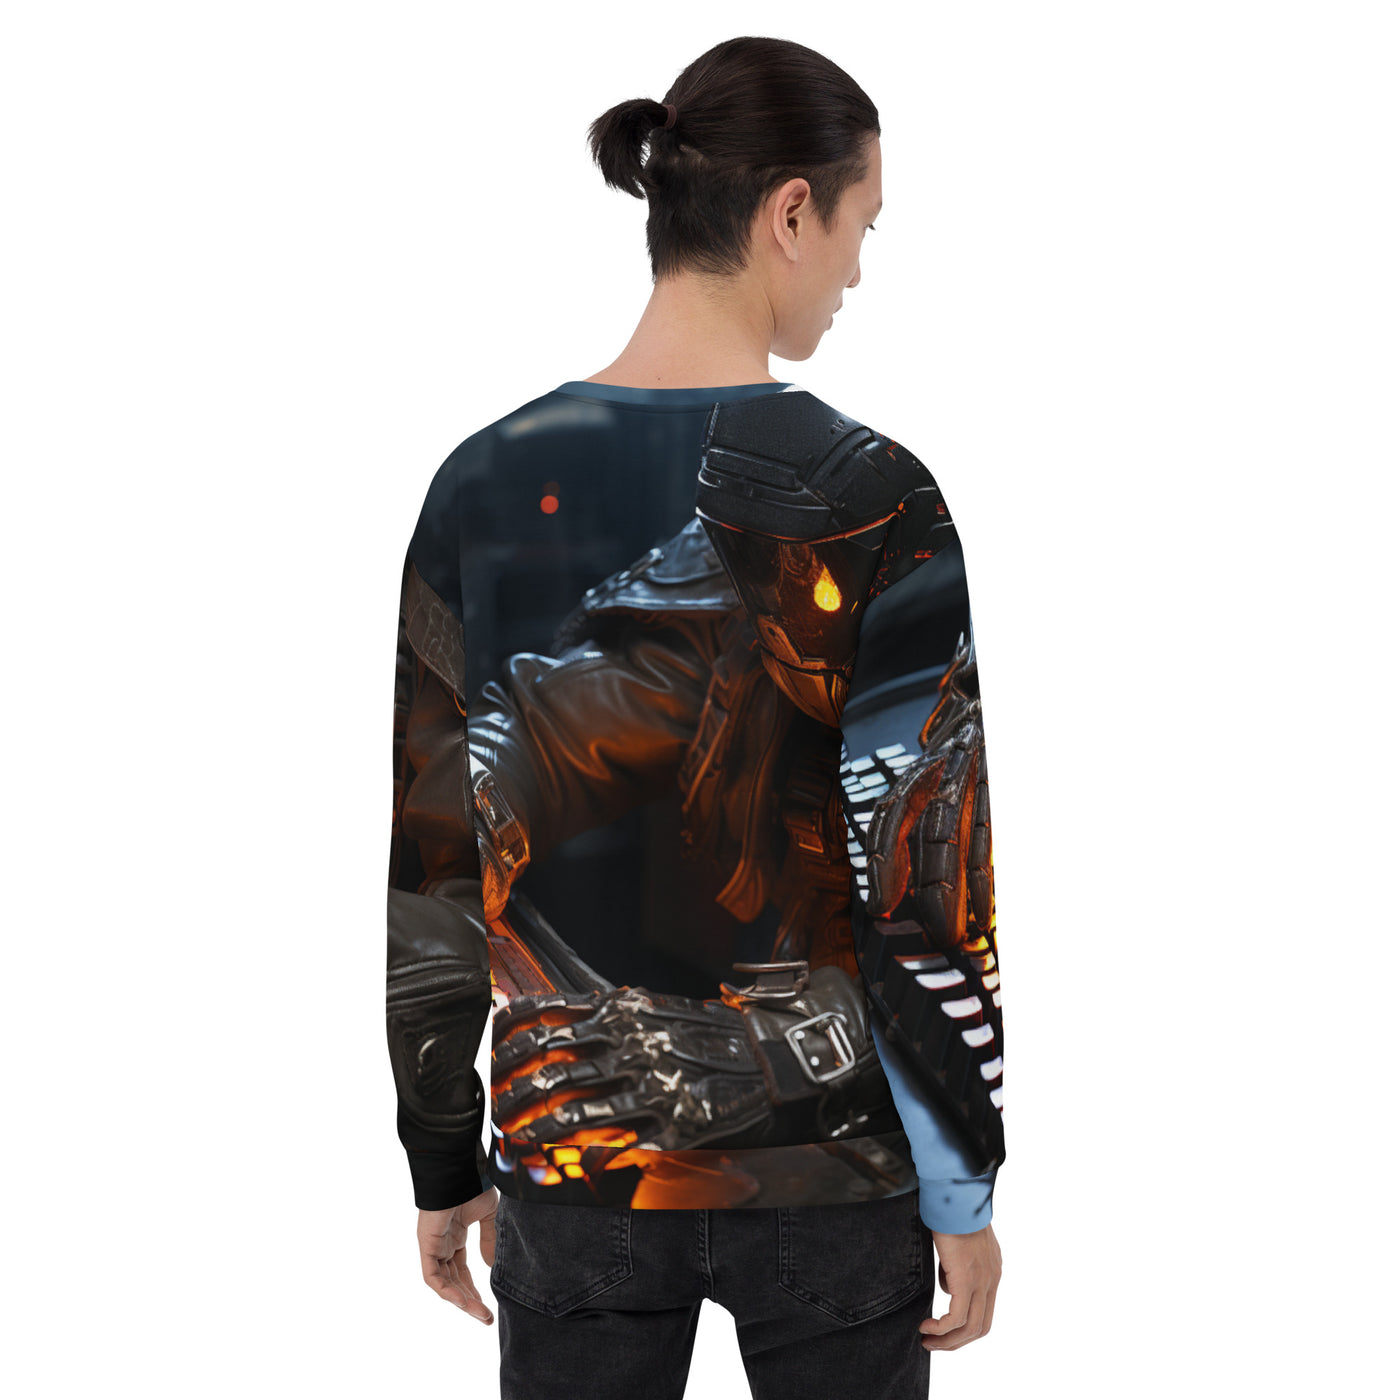 CyberArms Warrior v36 - Unisex Sweatshirt